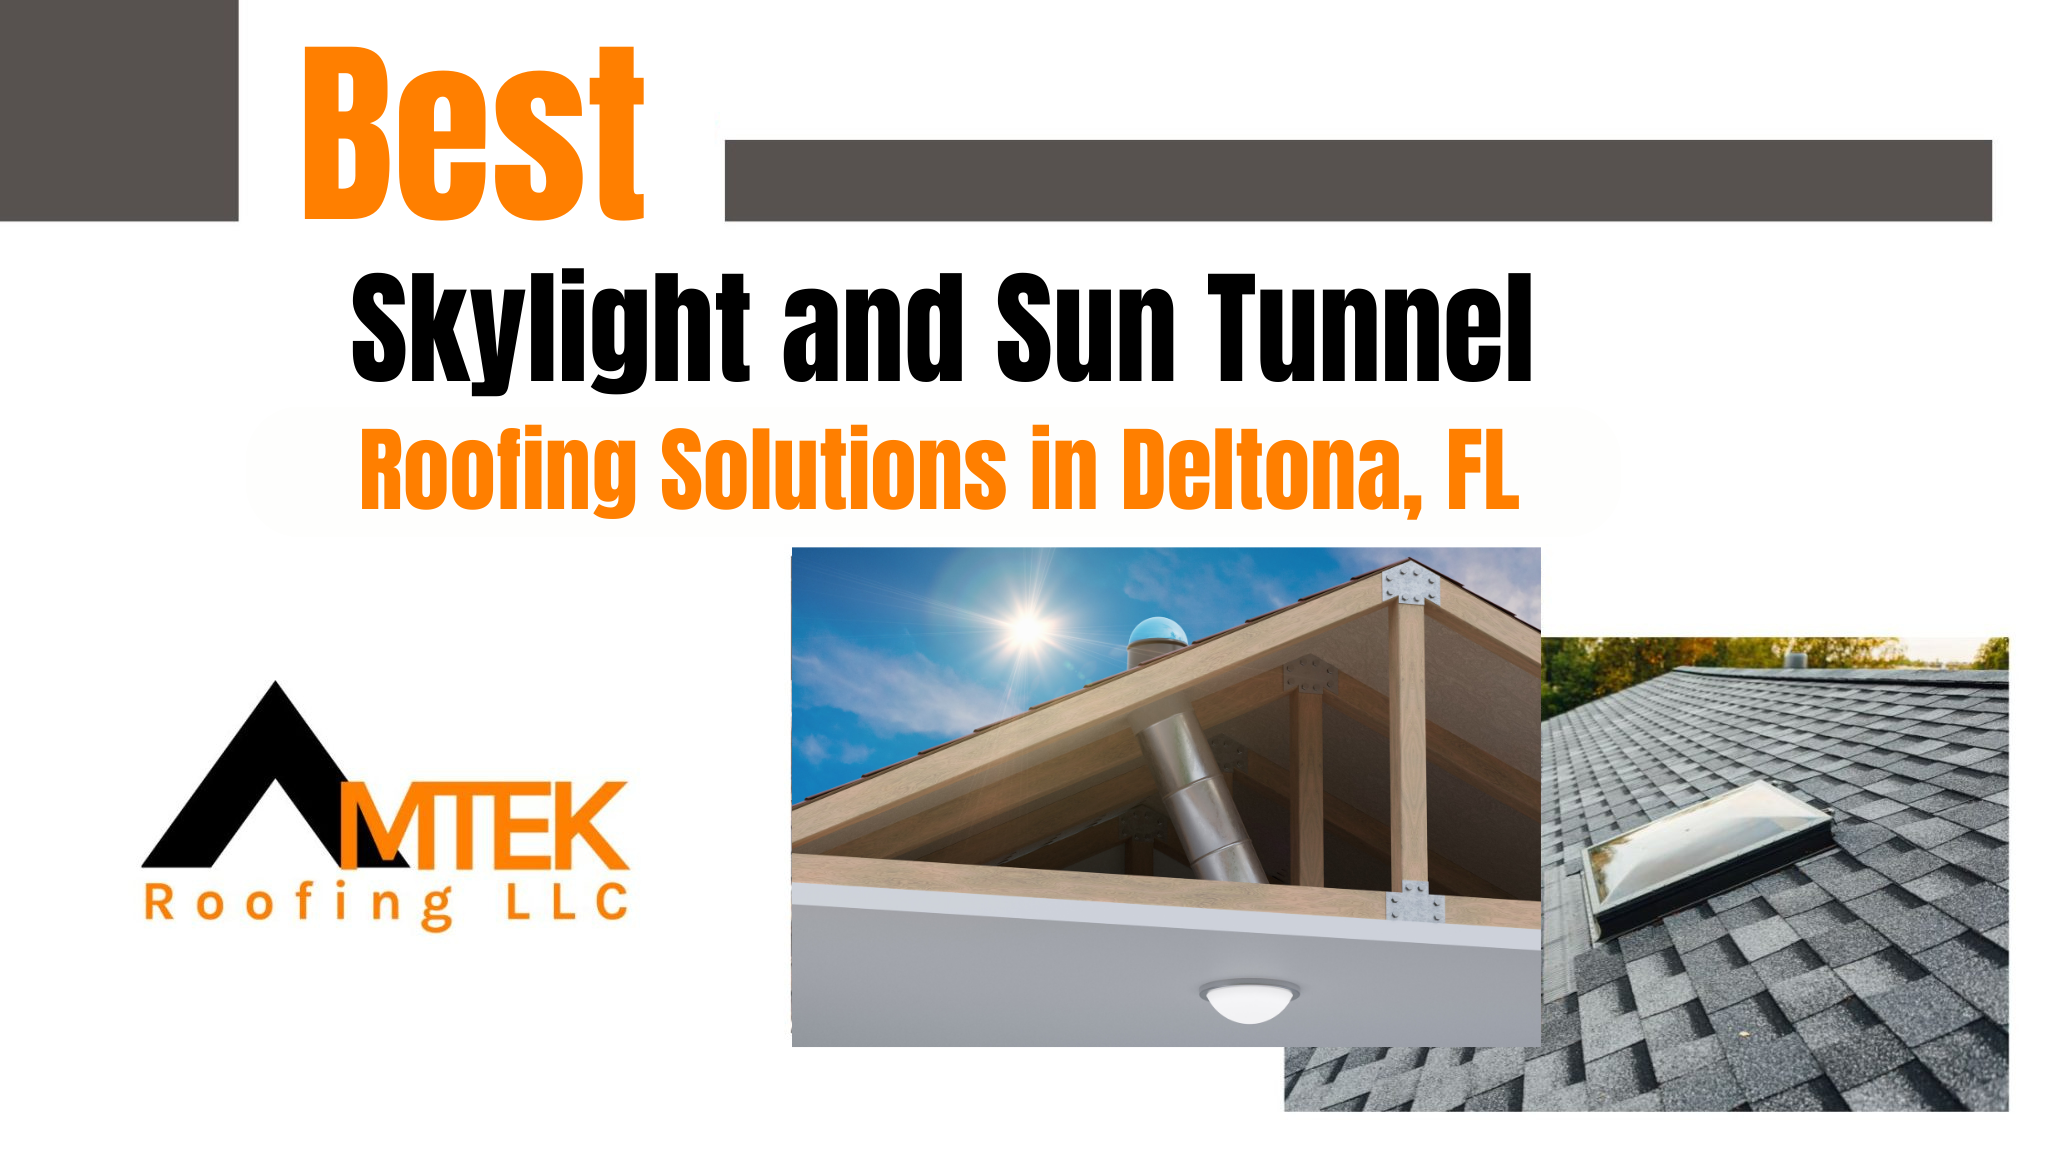 Skylight and Sun Tunnel Services